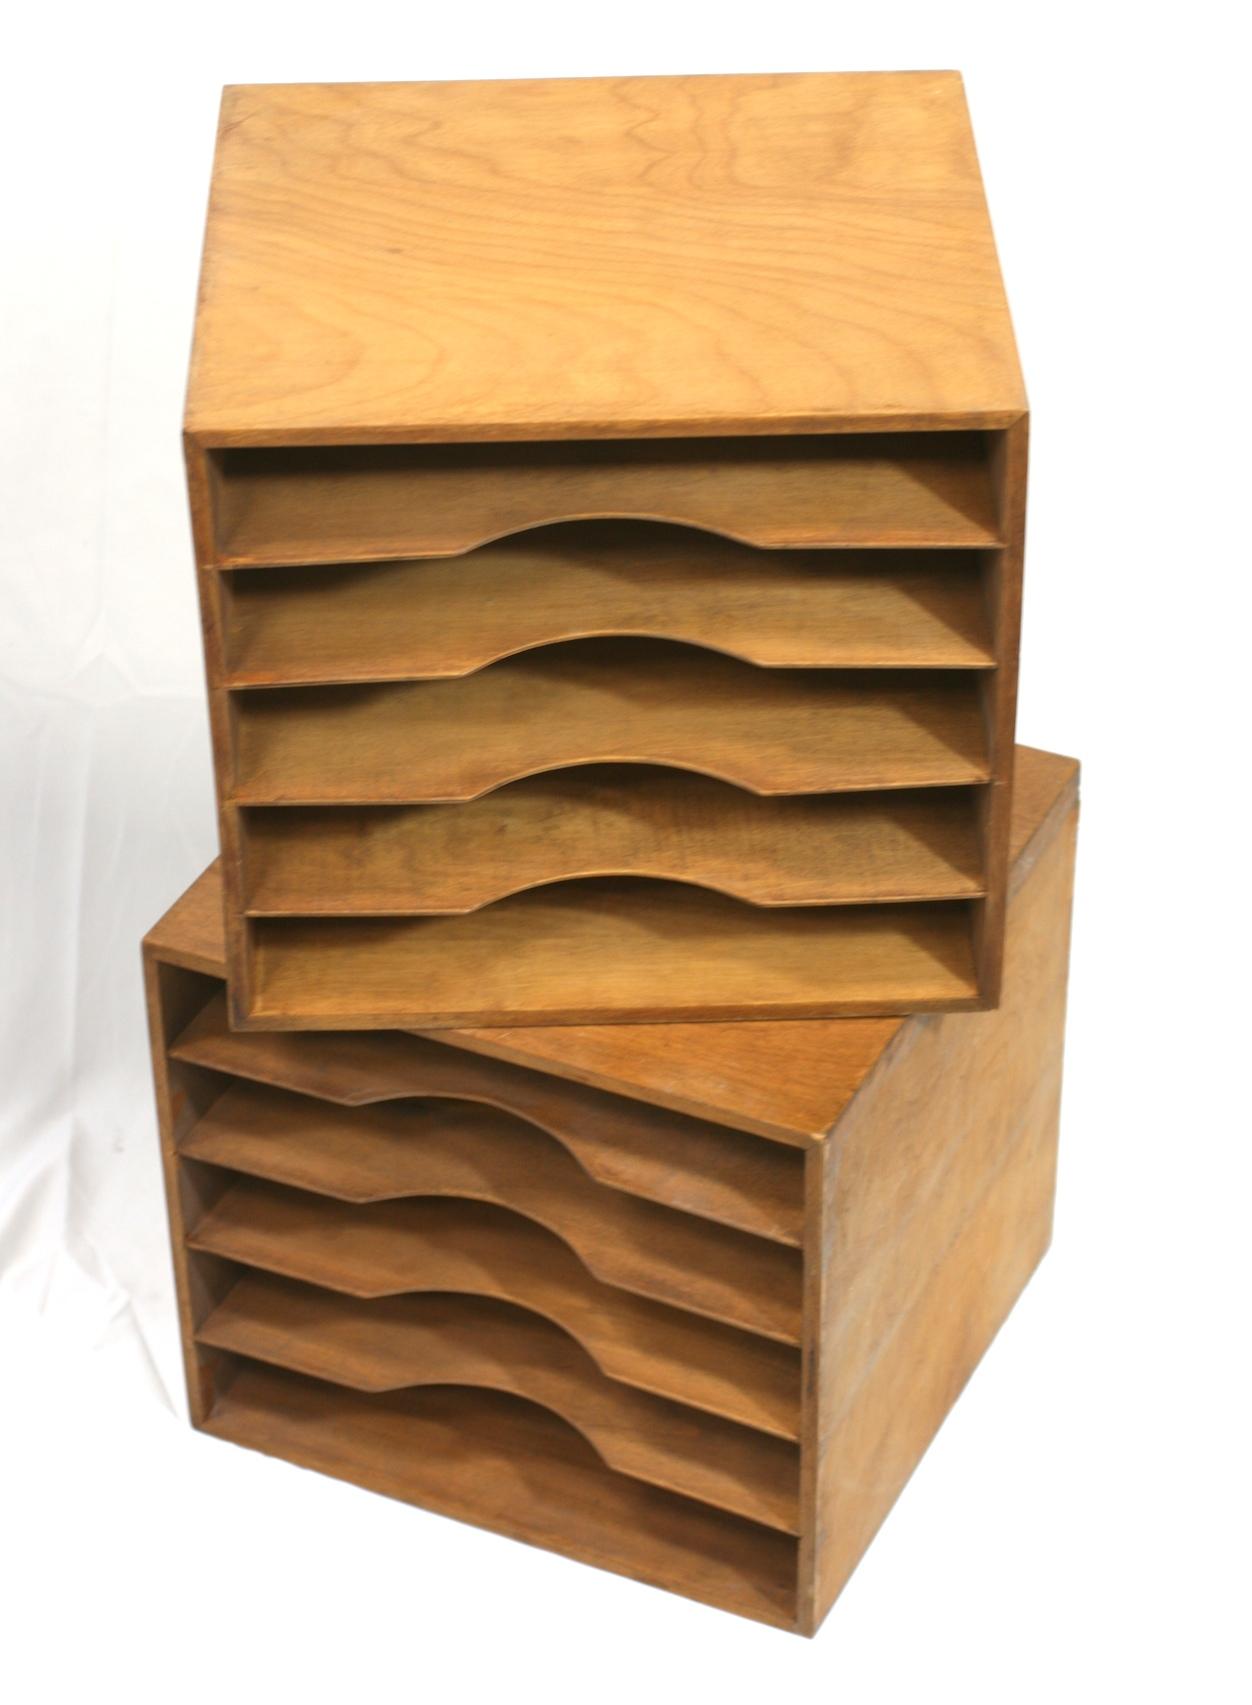 North American Art Deco Wood Filing Boxes